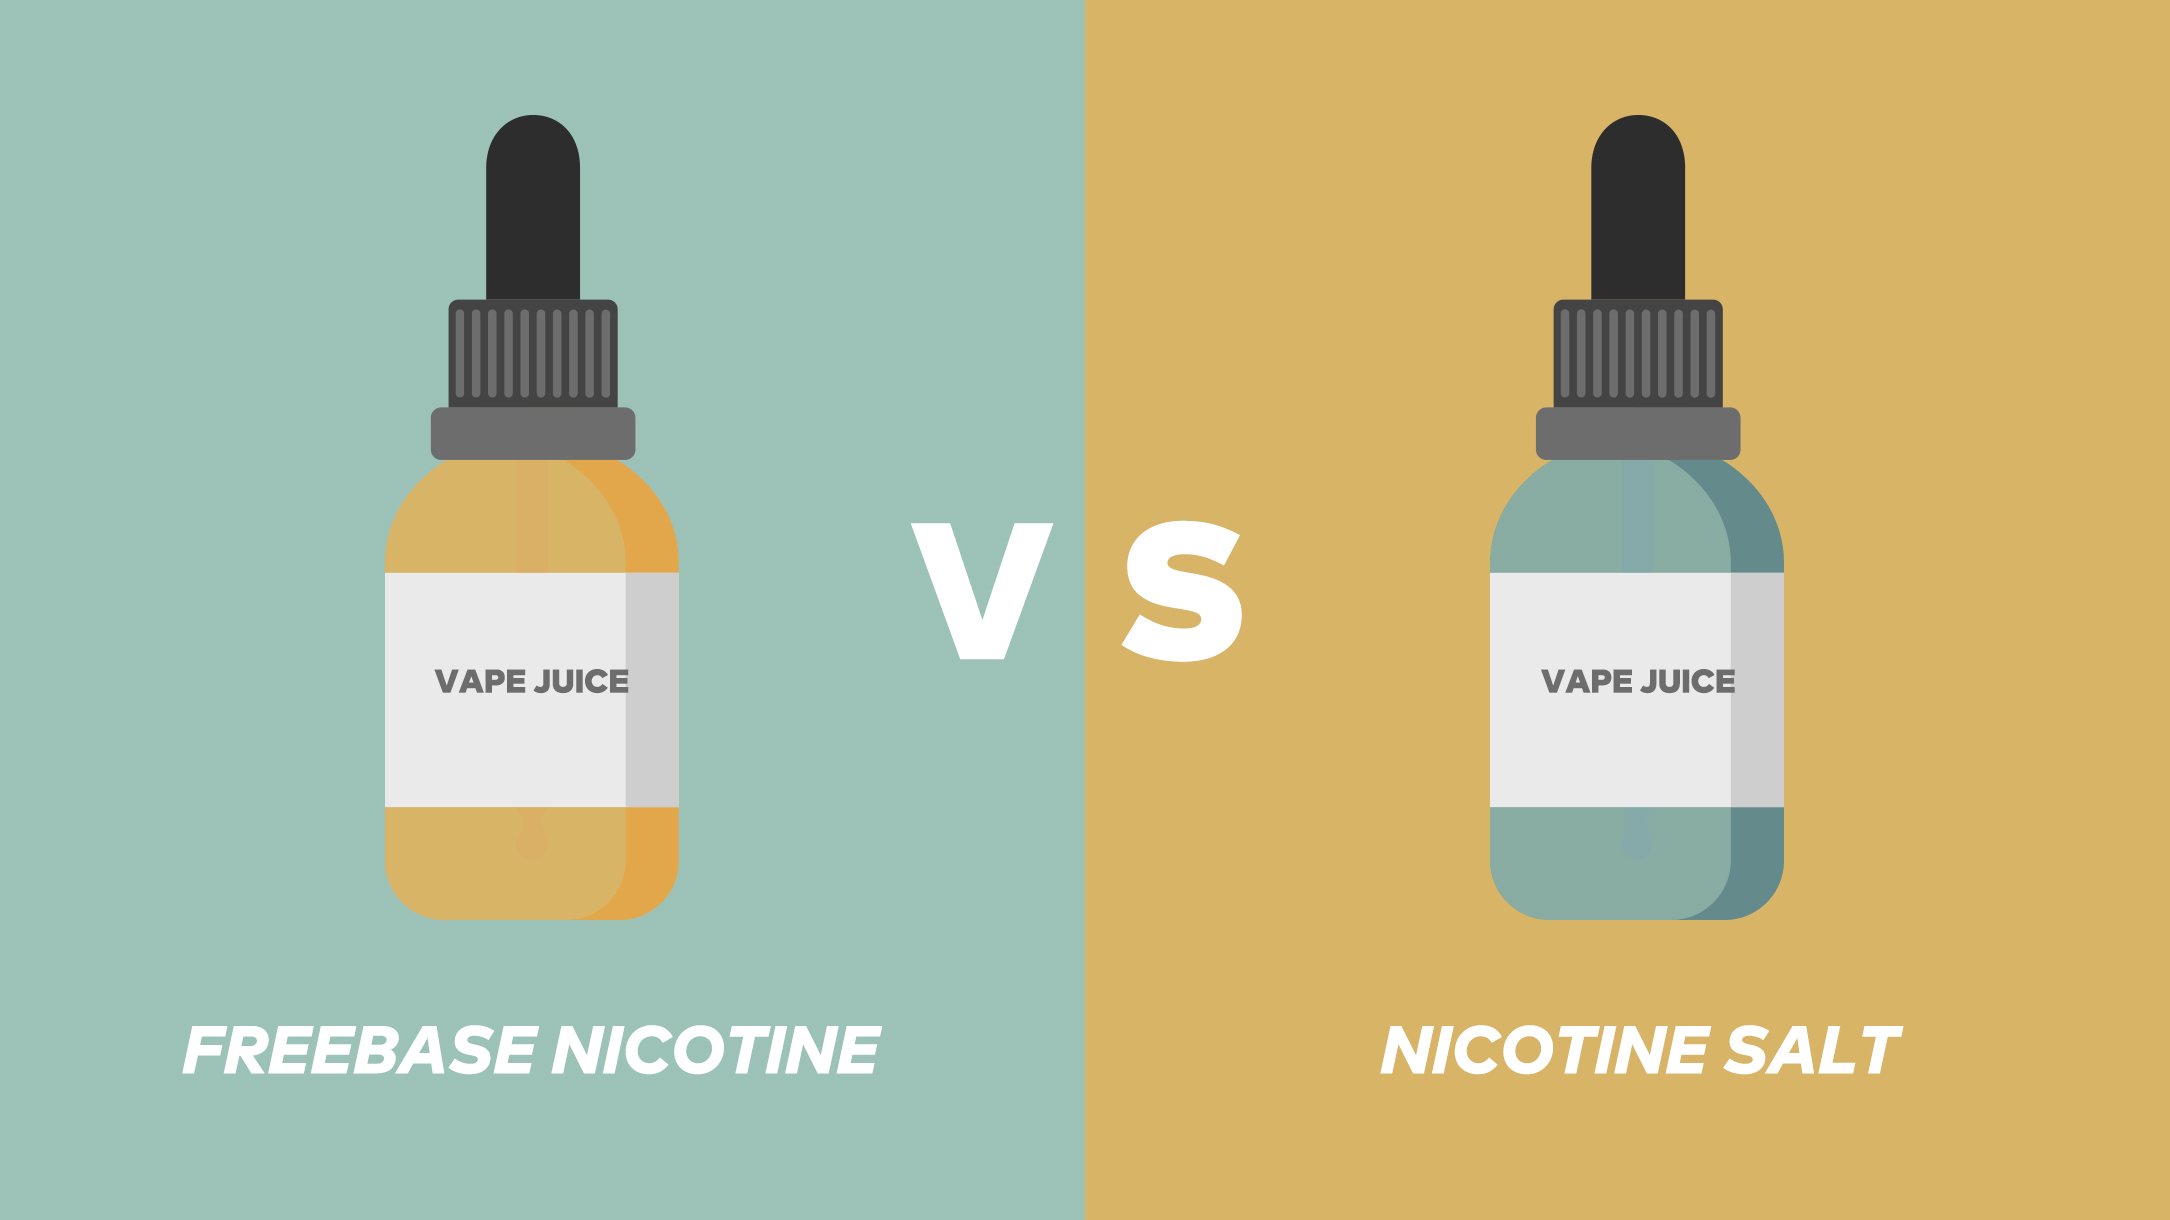 Freebase nicotine vs. nicotine salt